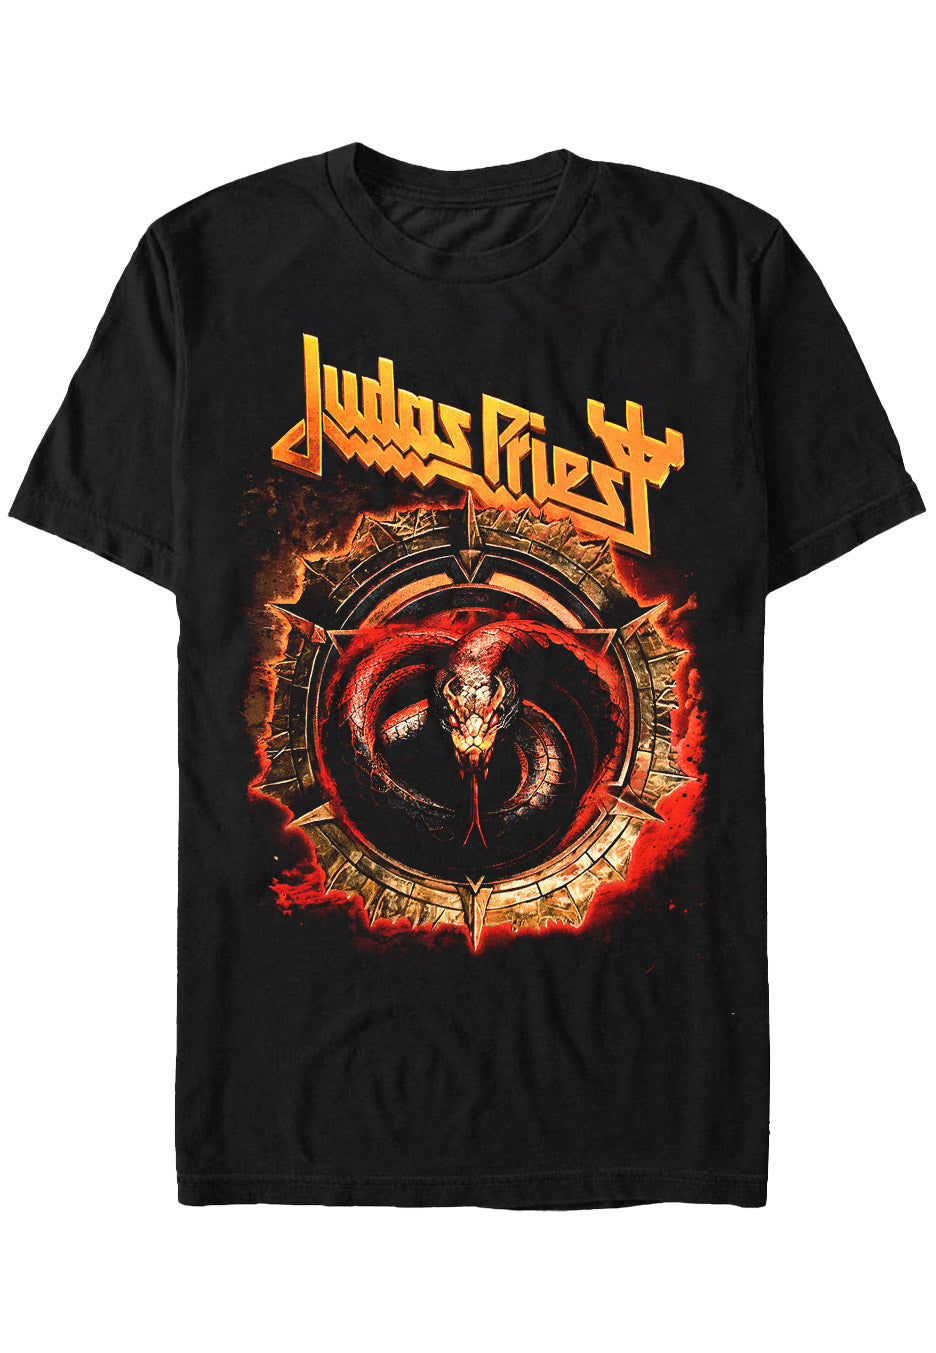 Judas Priest - The Serpent - T-Shirt